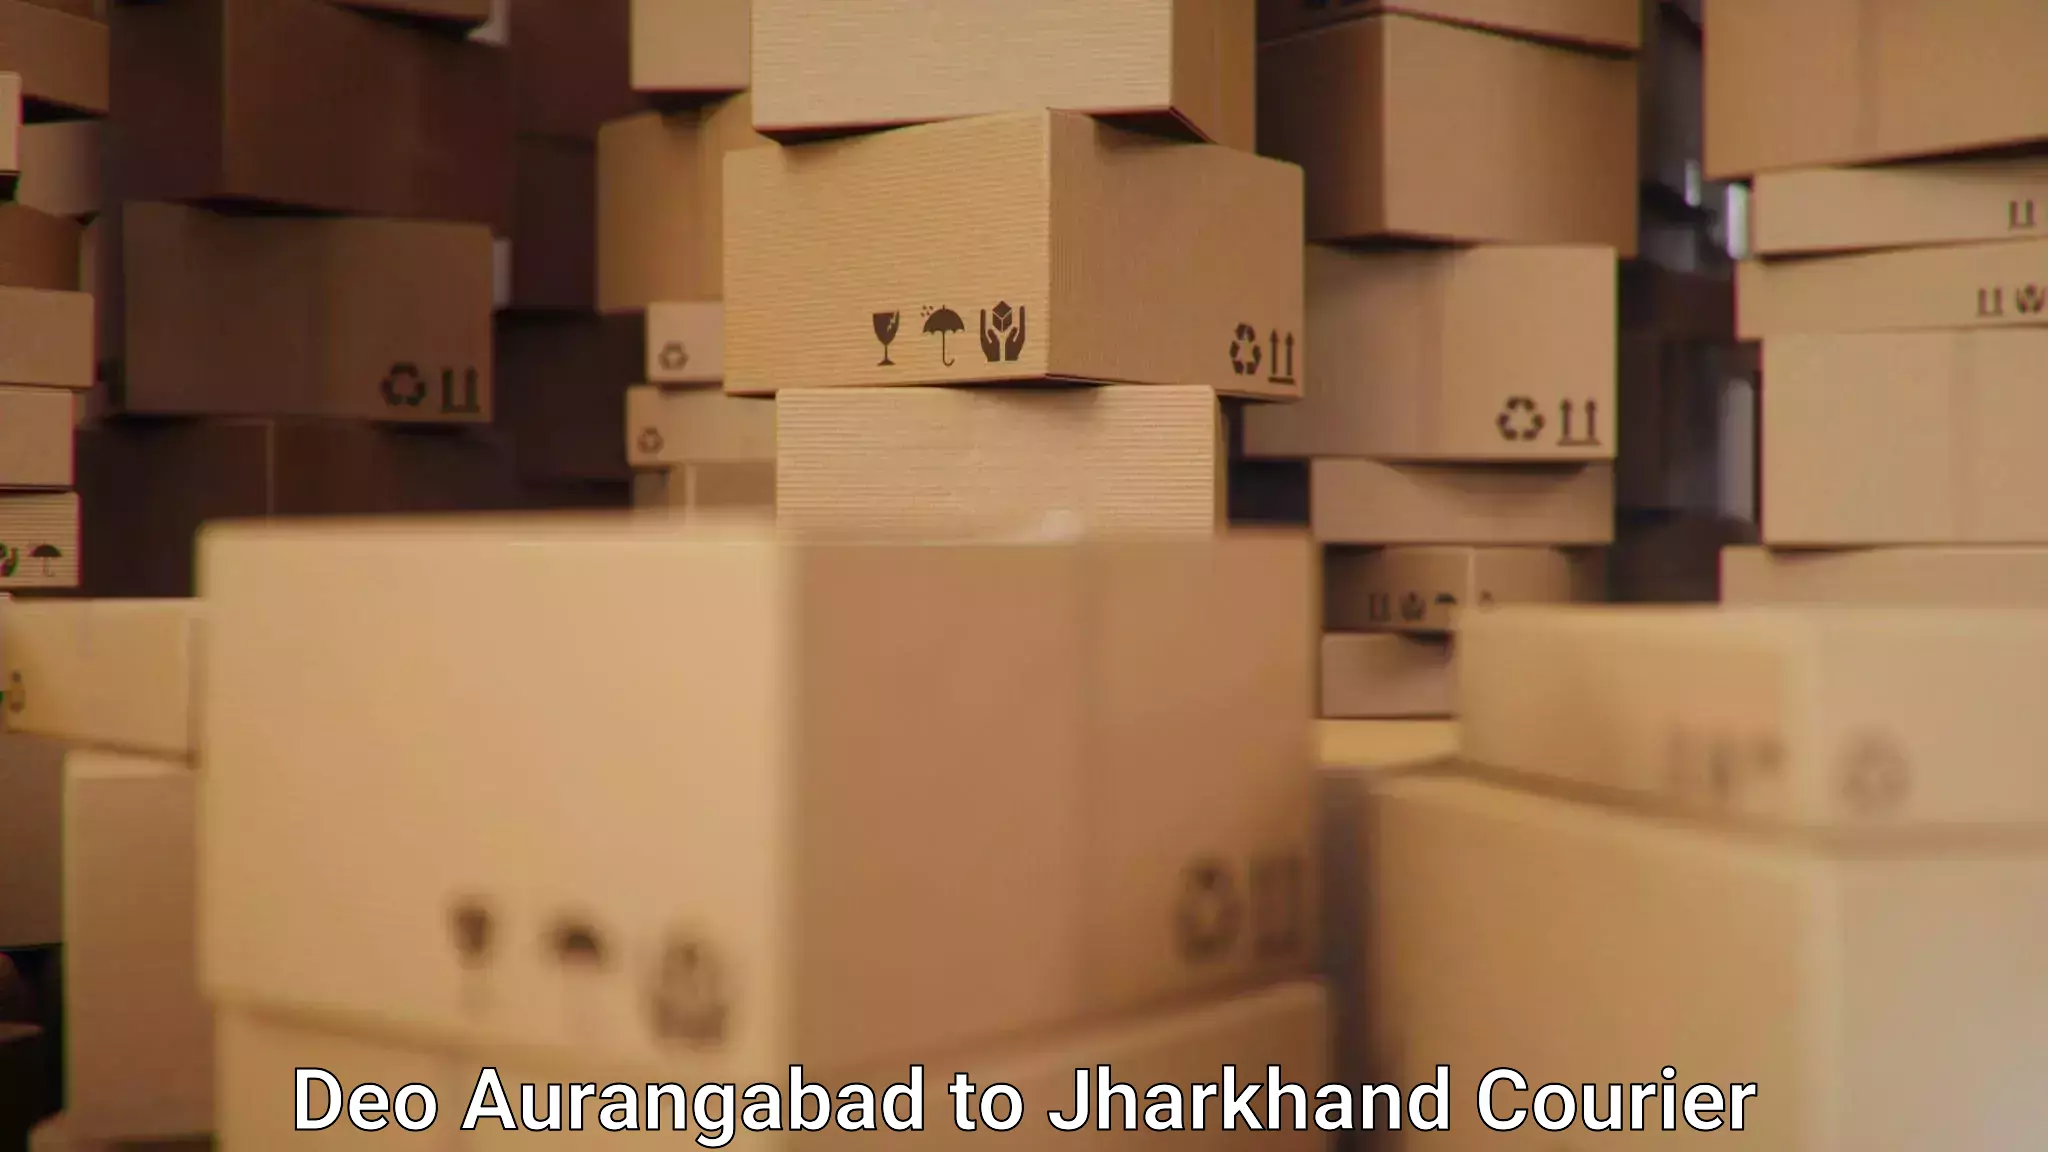 Courier service efficiency Deo Aurangabad to Chakuliya